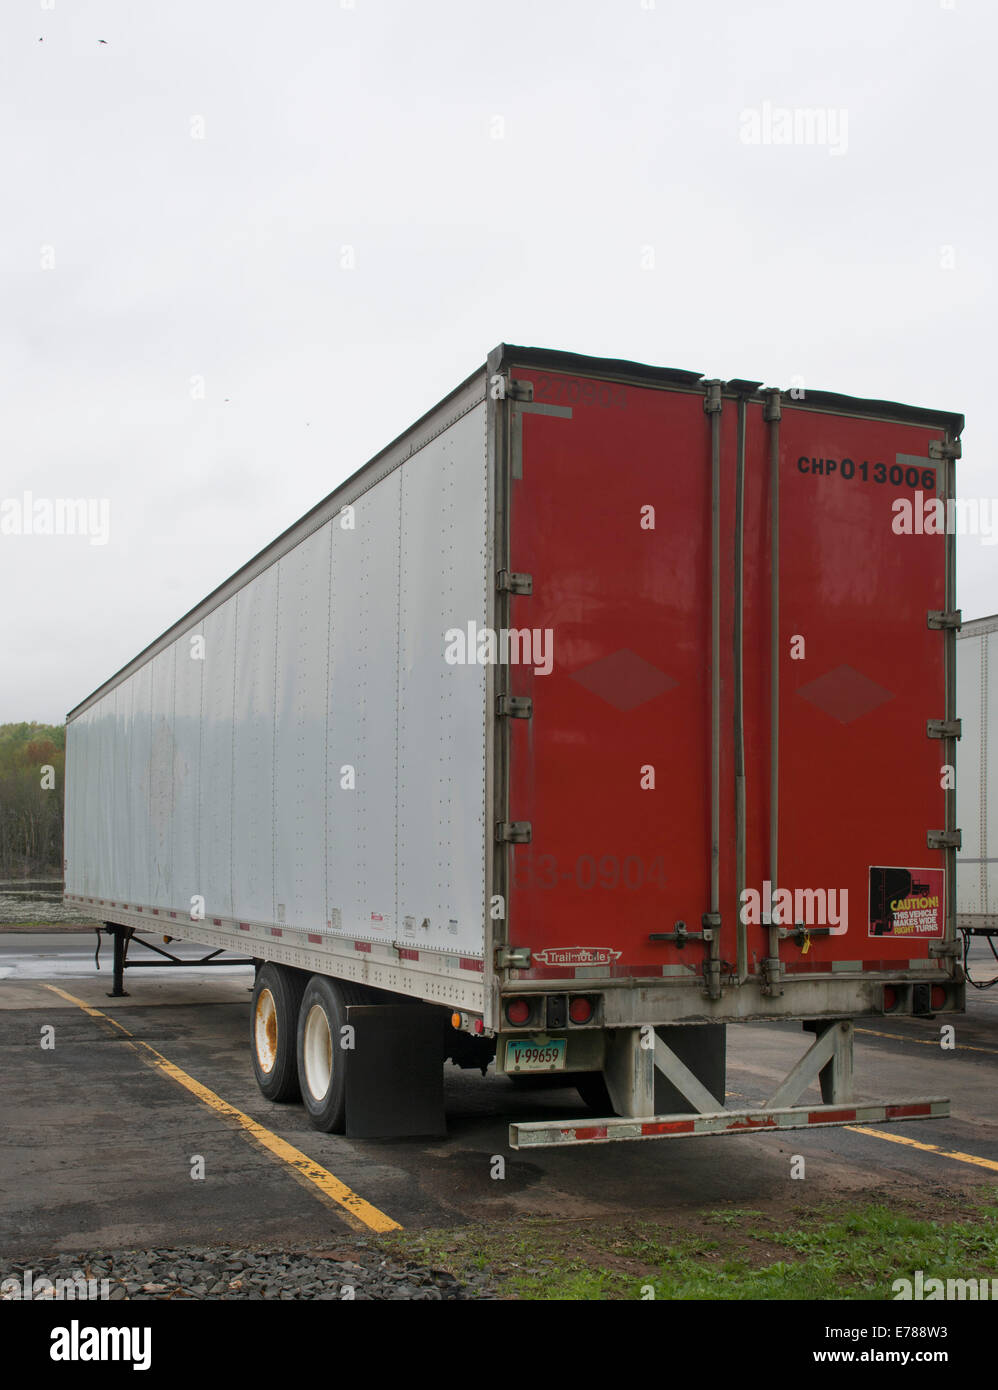 Truck trailer detail at Bozzuto's Distribution center. Stock Photo